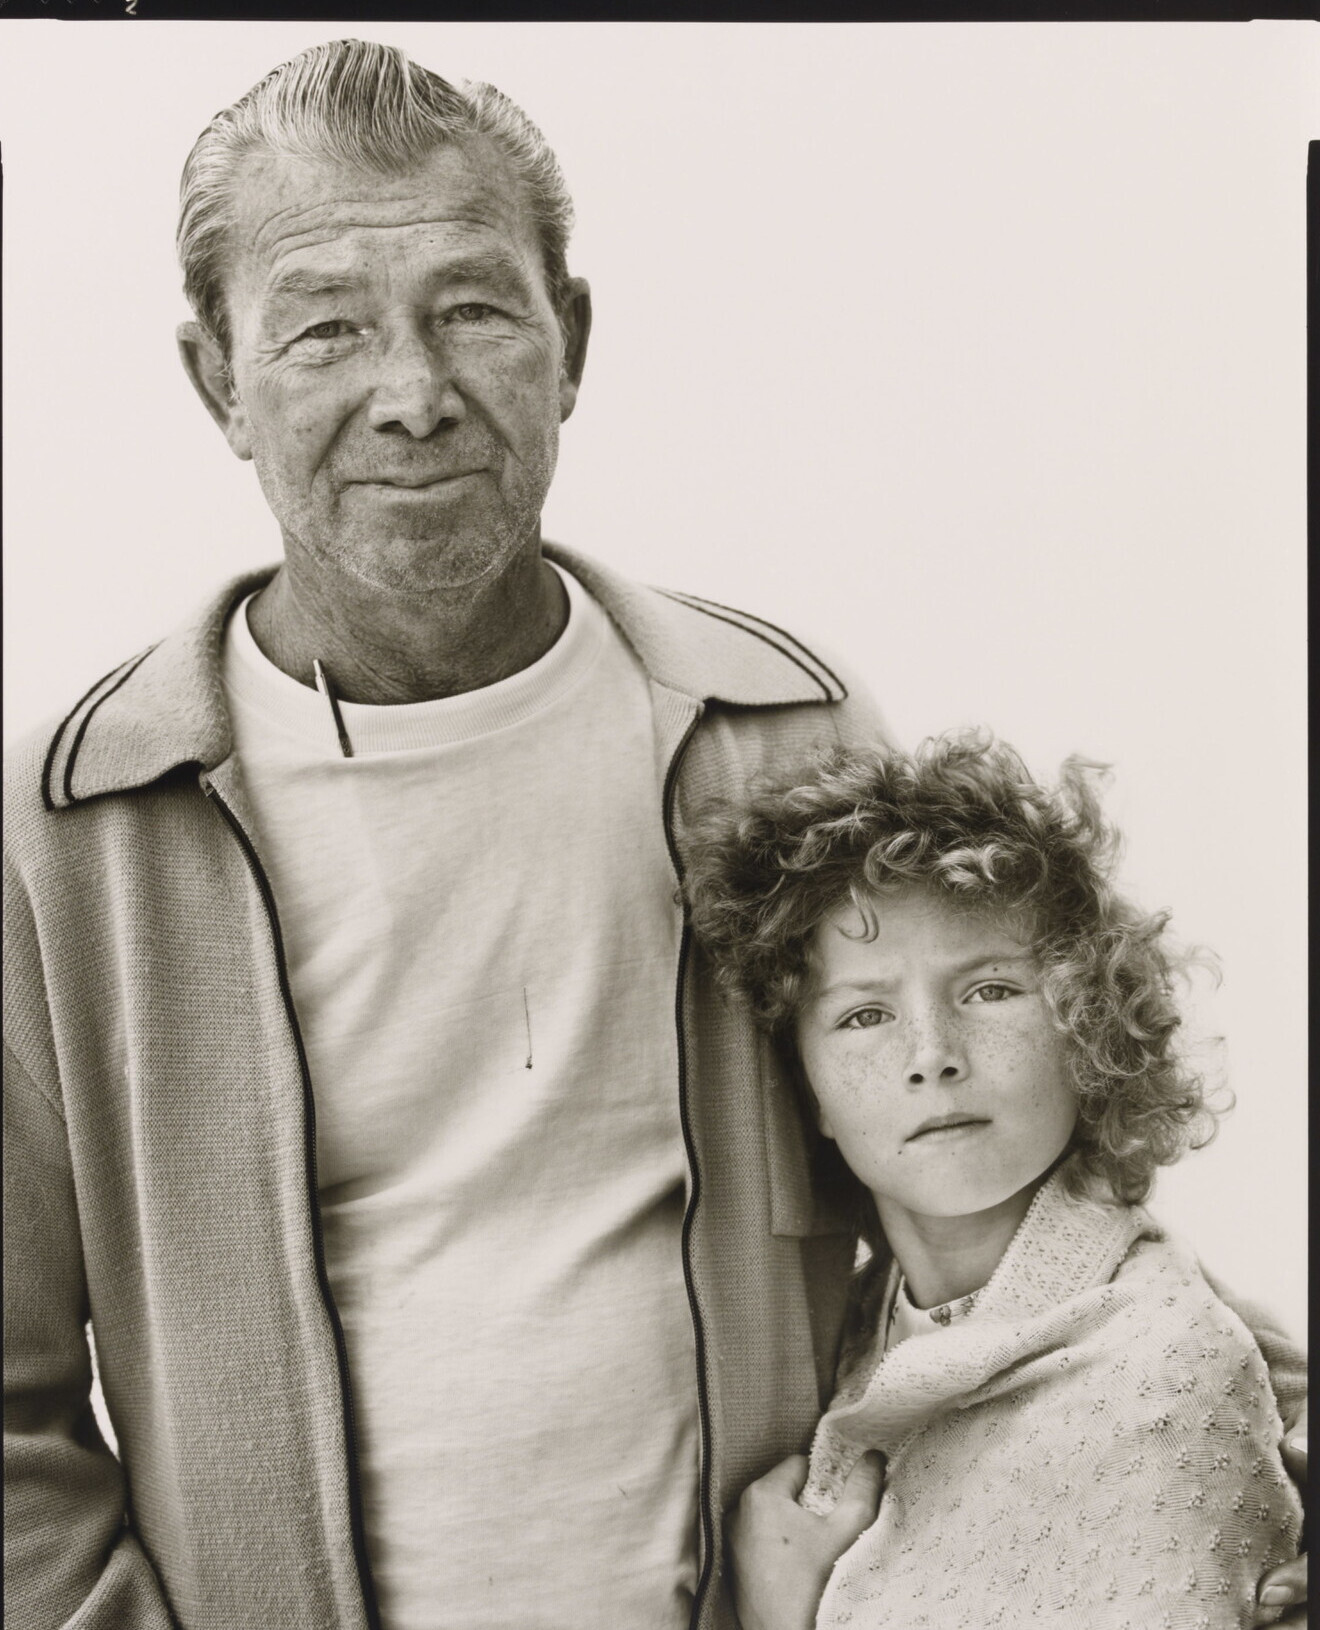 Макс Беннетт, медеплавильщик на пенсии, и его дочь Шеннон, Форт Бриджер, Вайоминг, 1983 г. Фотограф Ричард Аведон